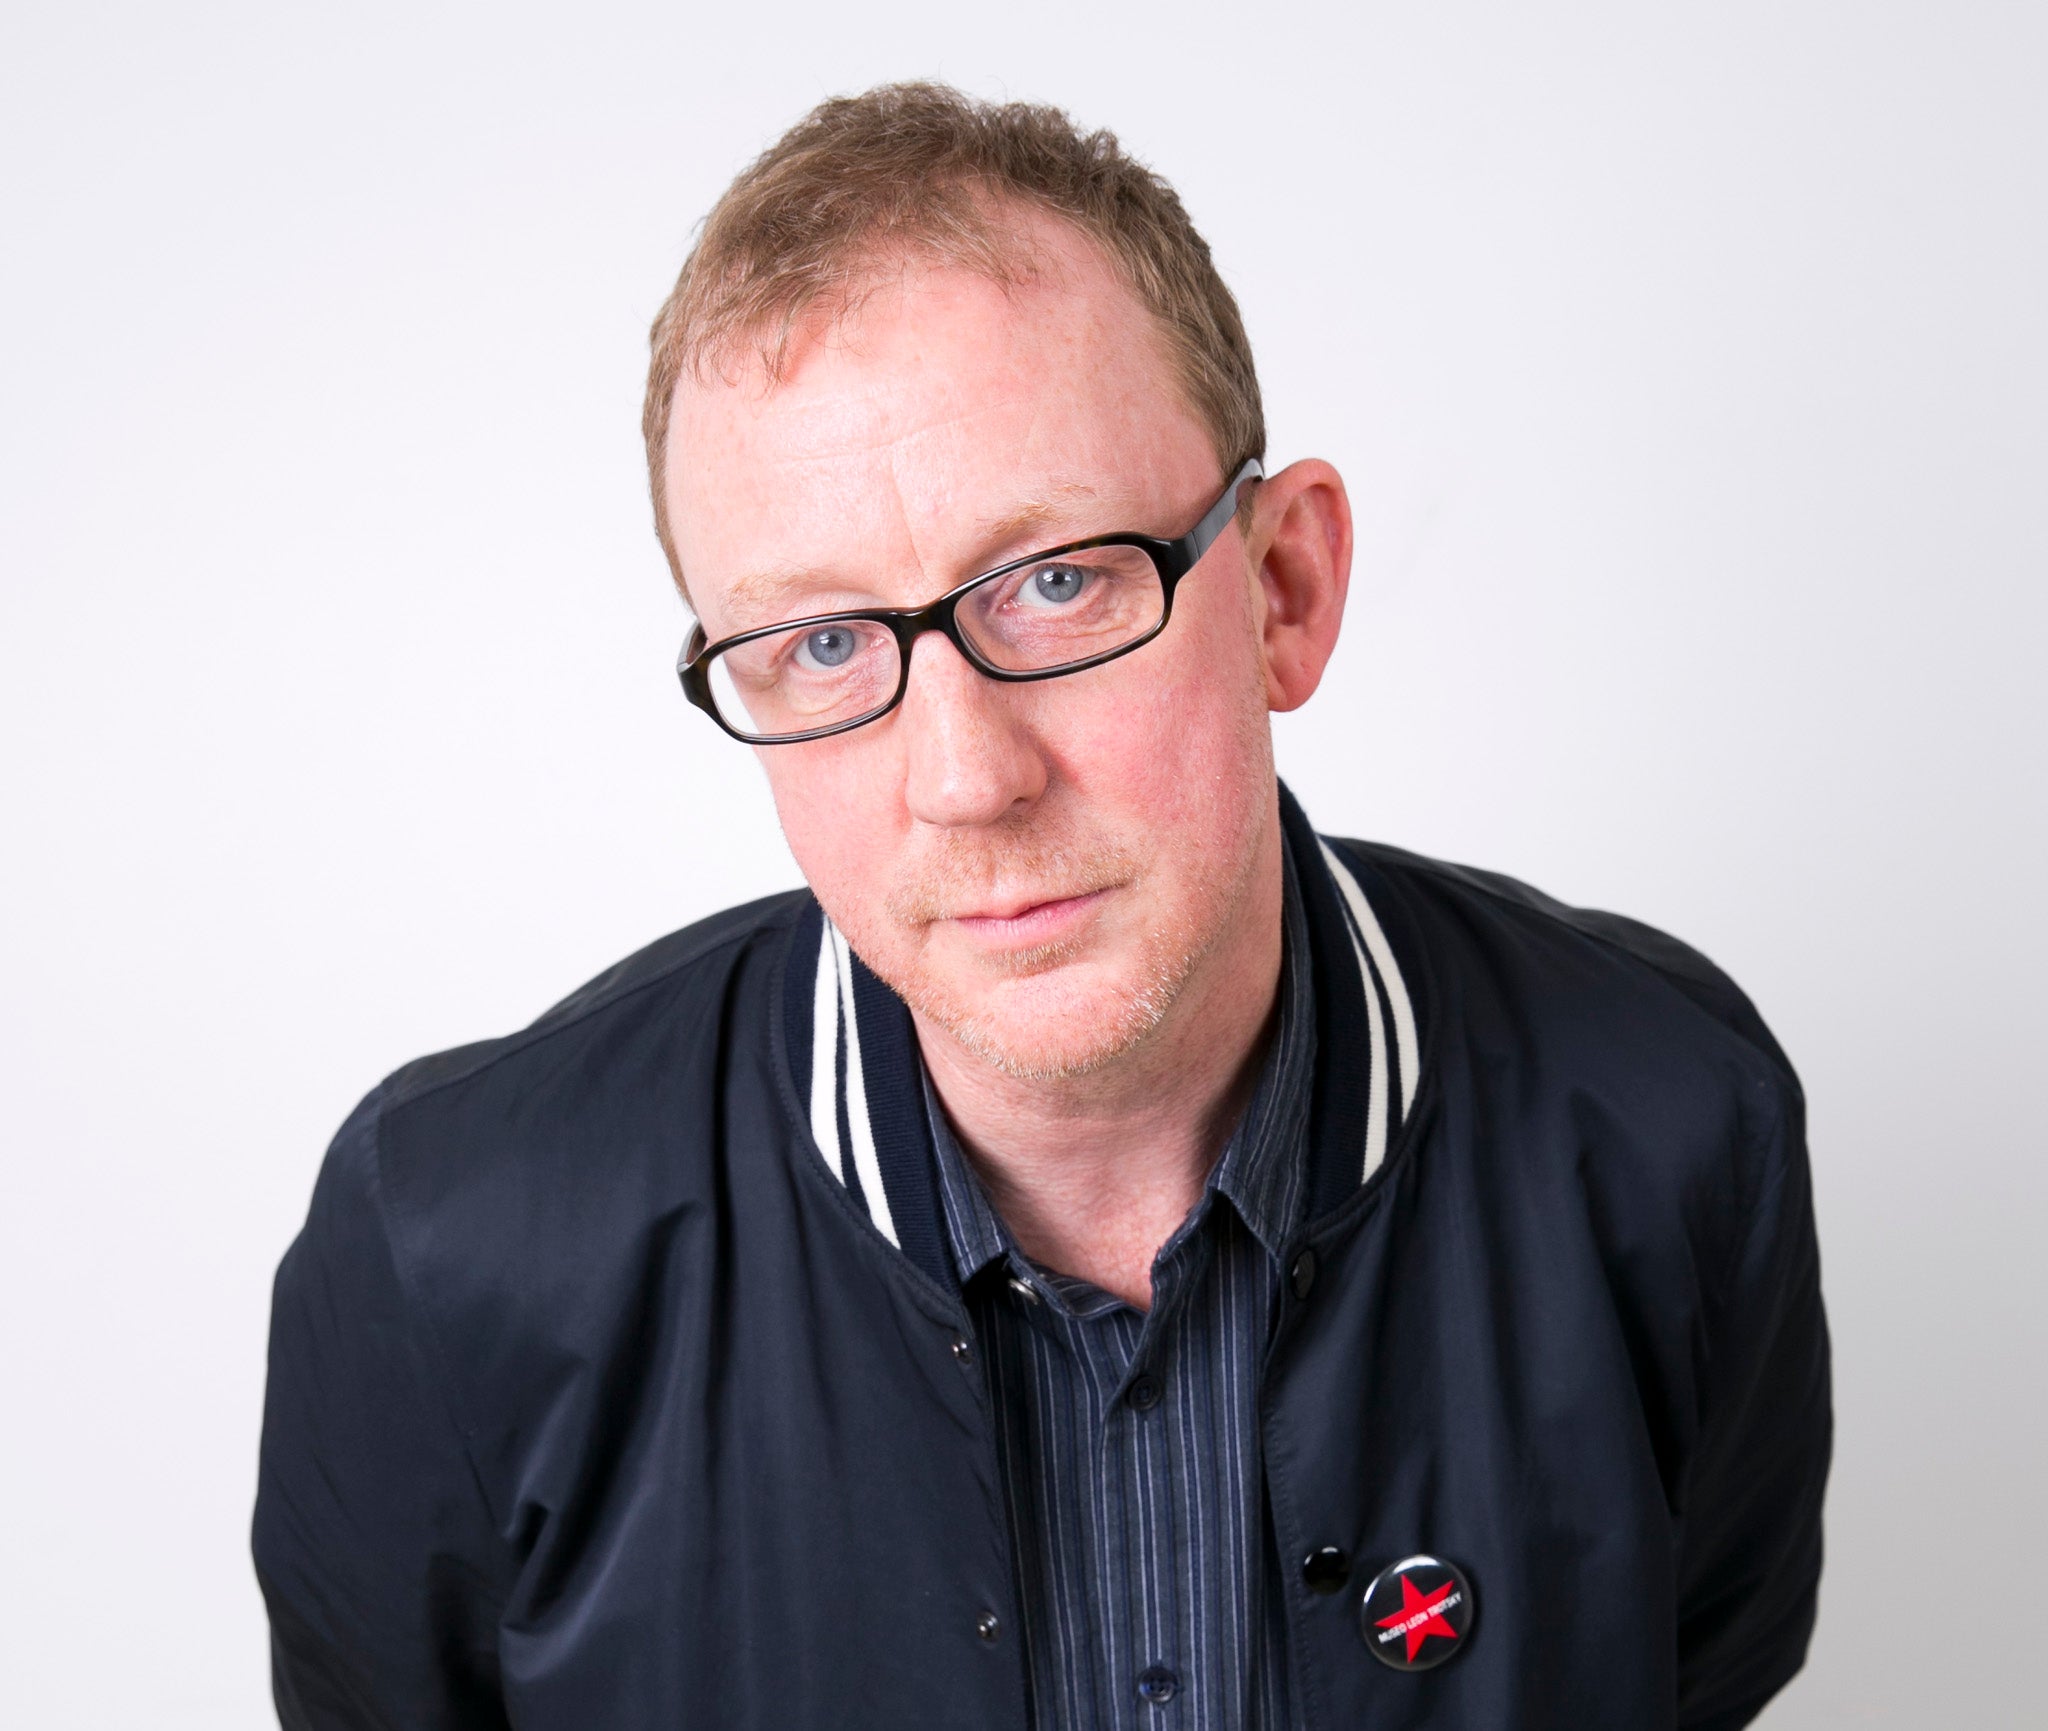 XFM's new DJ: Blur's Dave Rowntree